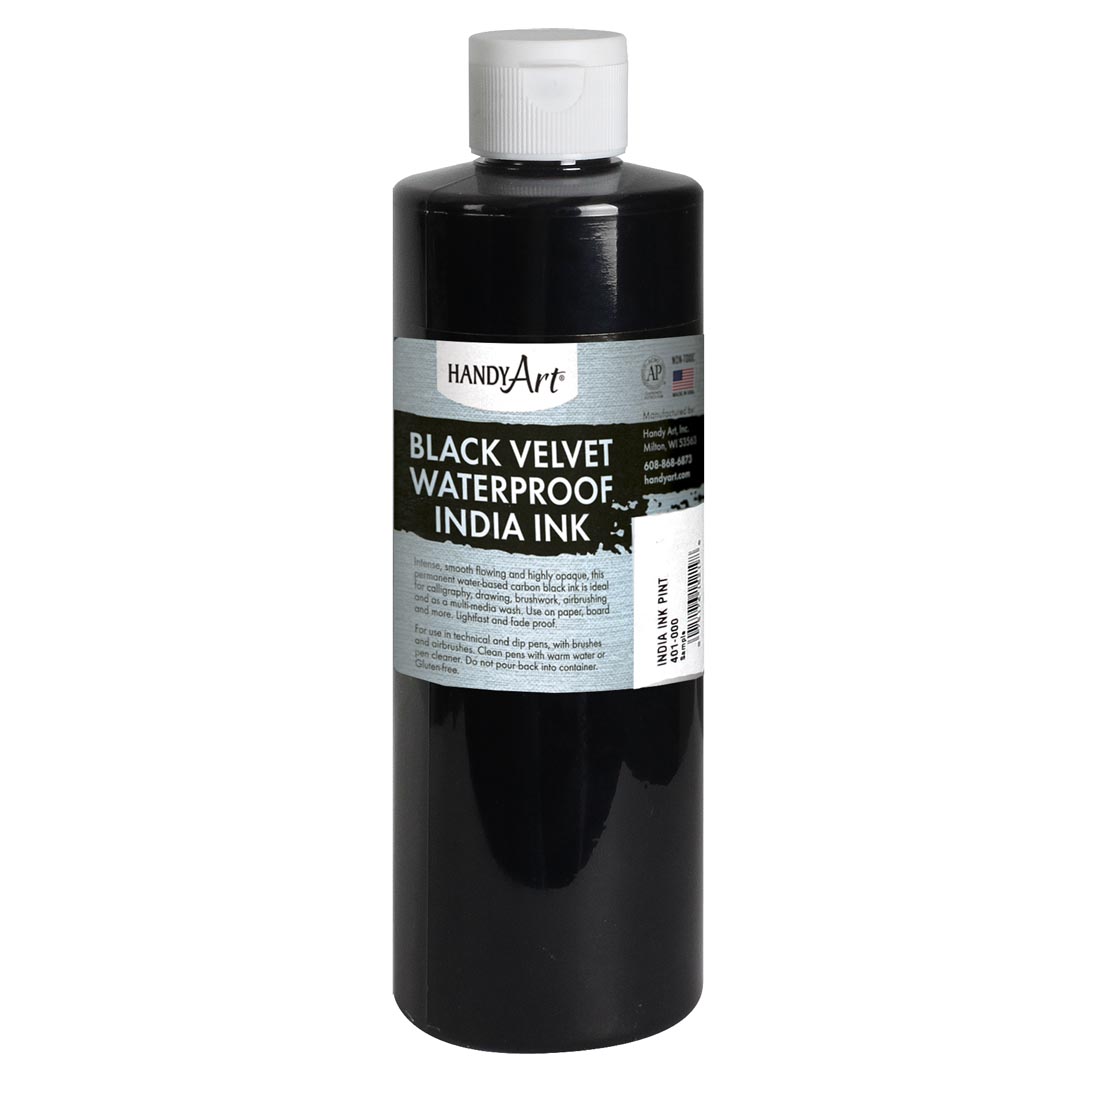 Handy Art Black Velvet Waterproof India Ink